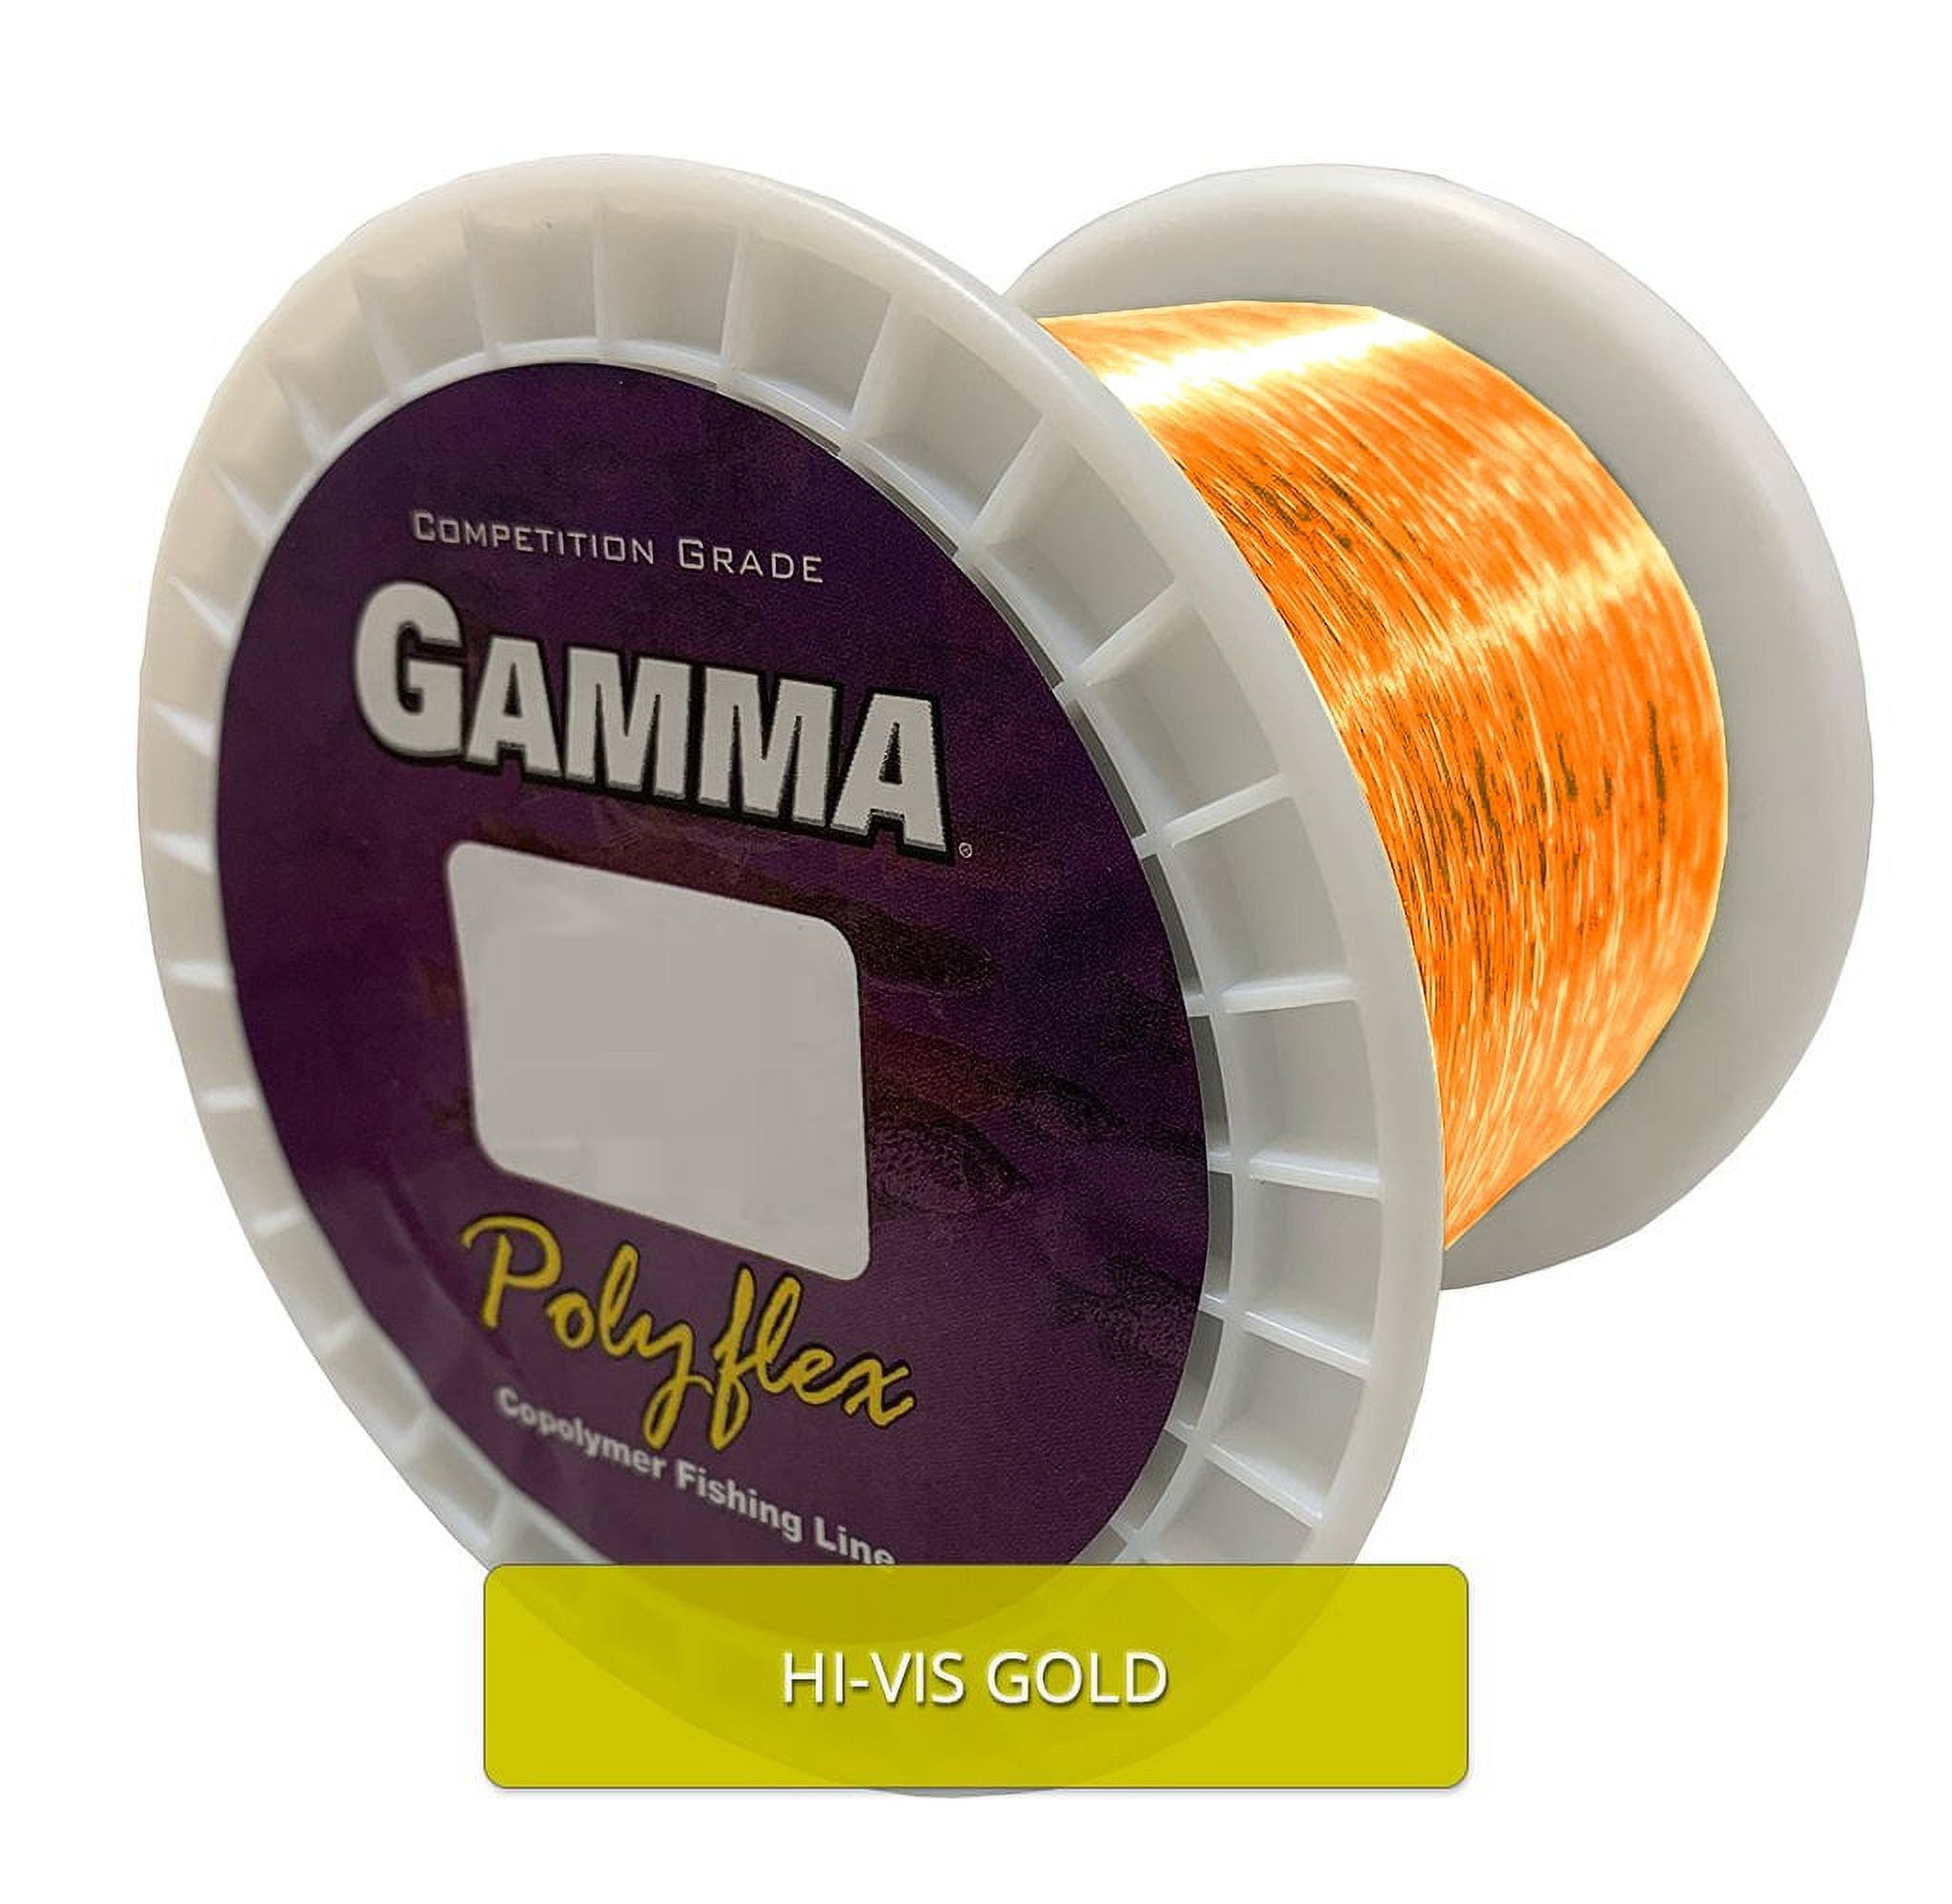 GAMMA Polyflex Copolymer Fishing Line Bulk Spool, Hi-Vis Gold, 4lb